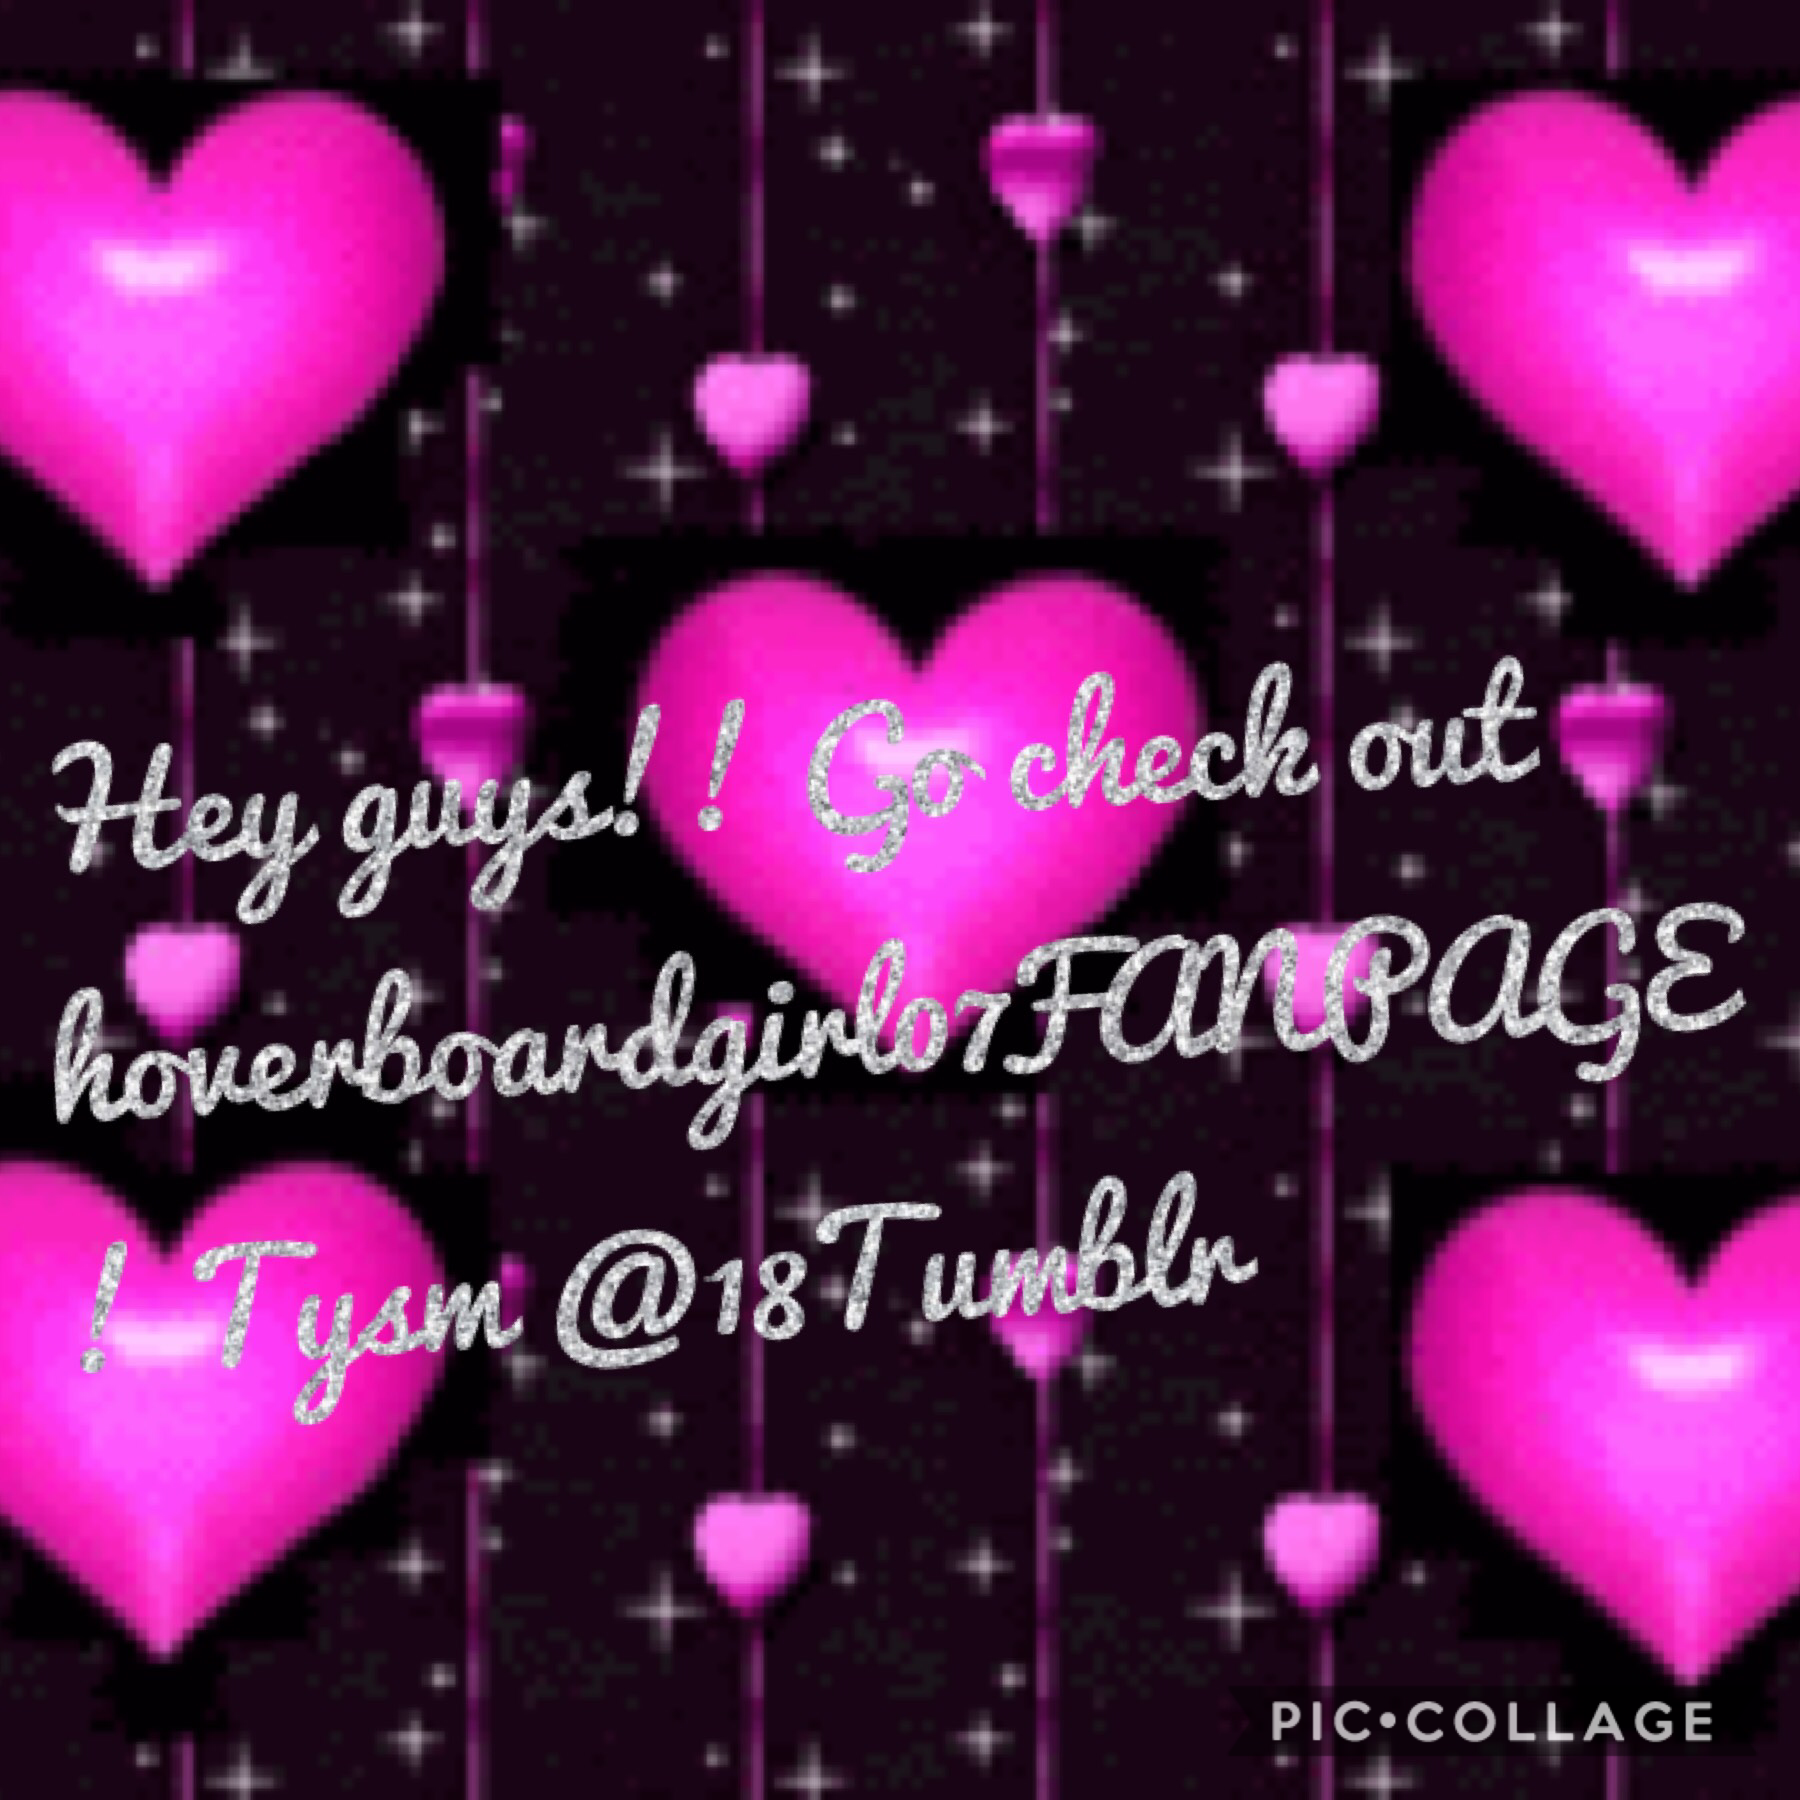 Give @18Tumblr a like/follow!! Plz also follow my fan page!!!